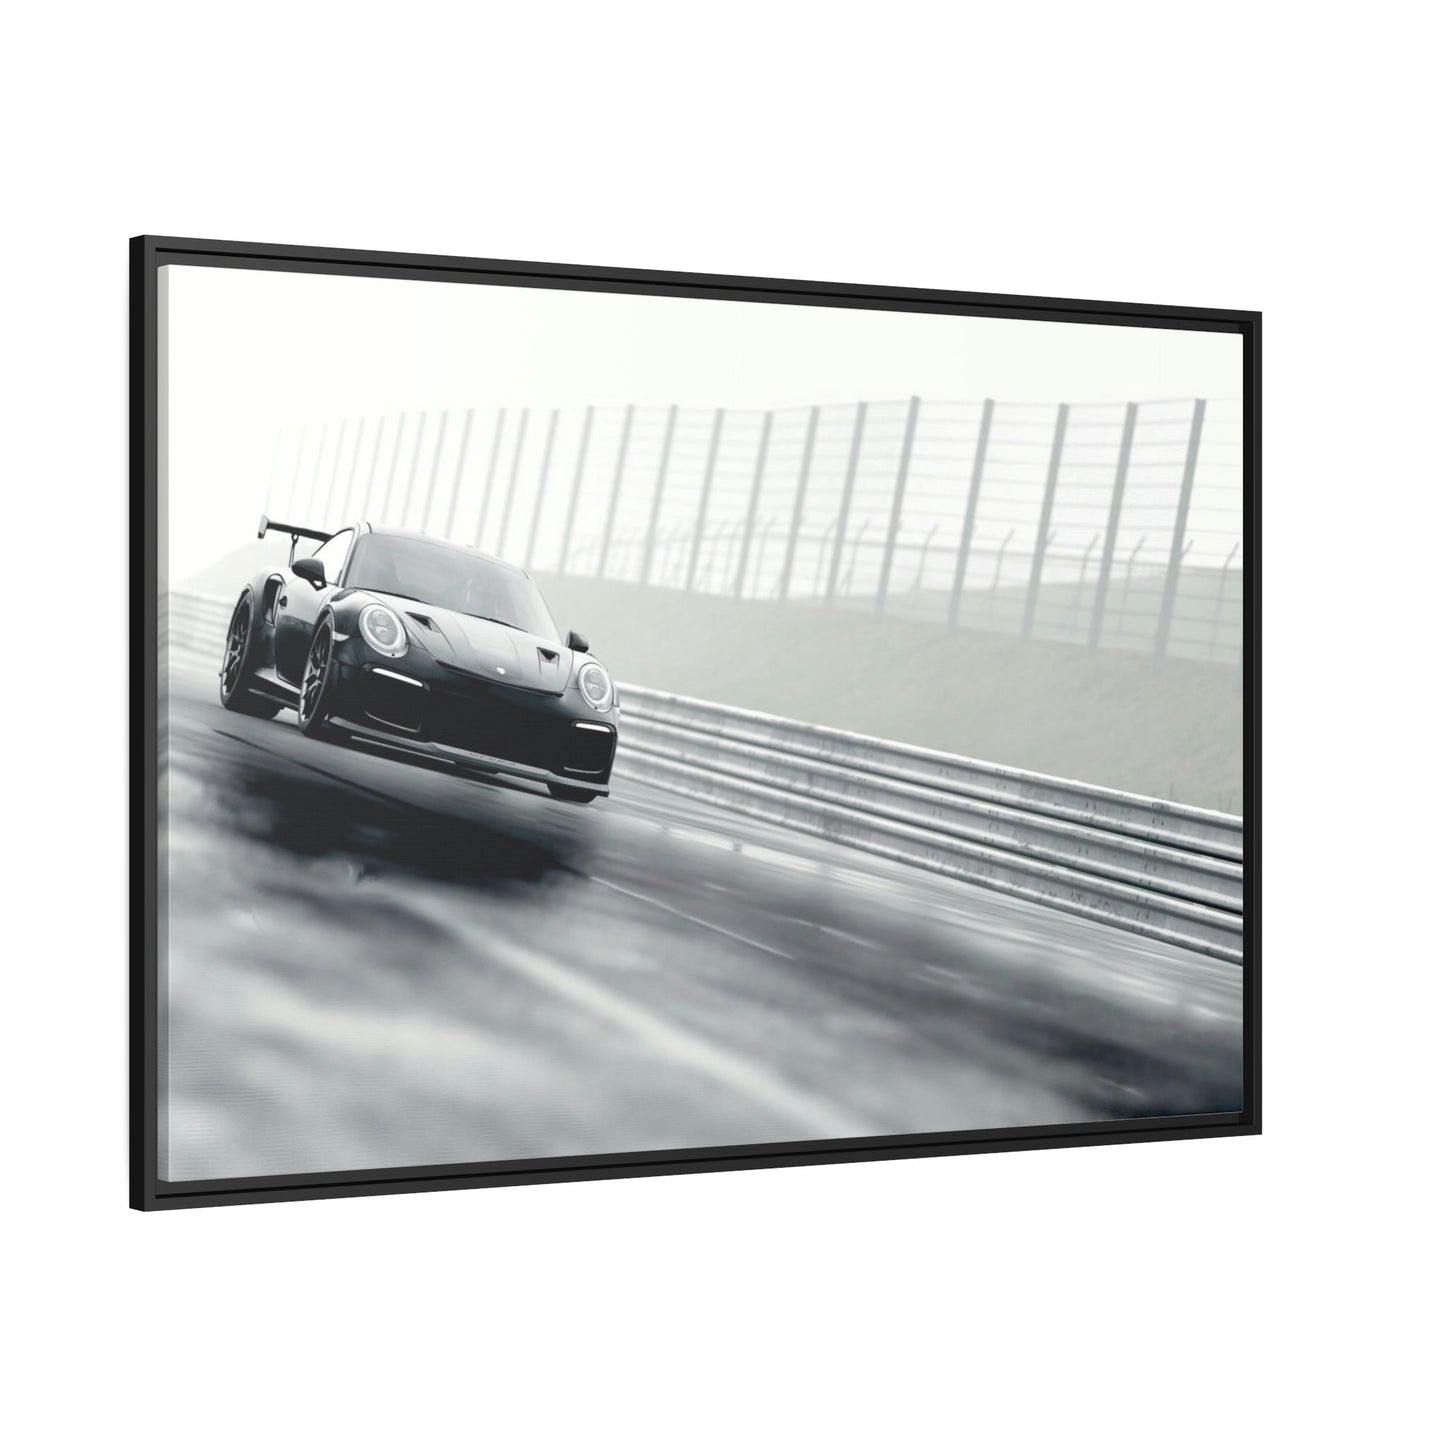 Porsche Power: A Striking Natural Canvas Print of an Iconic Sports Car